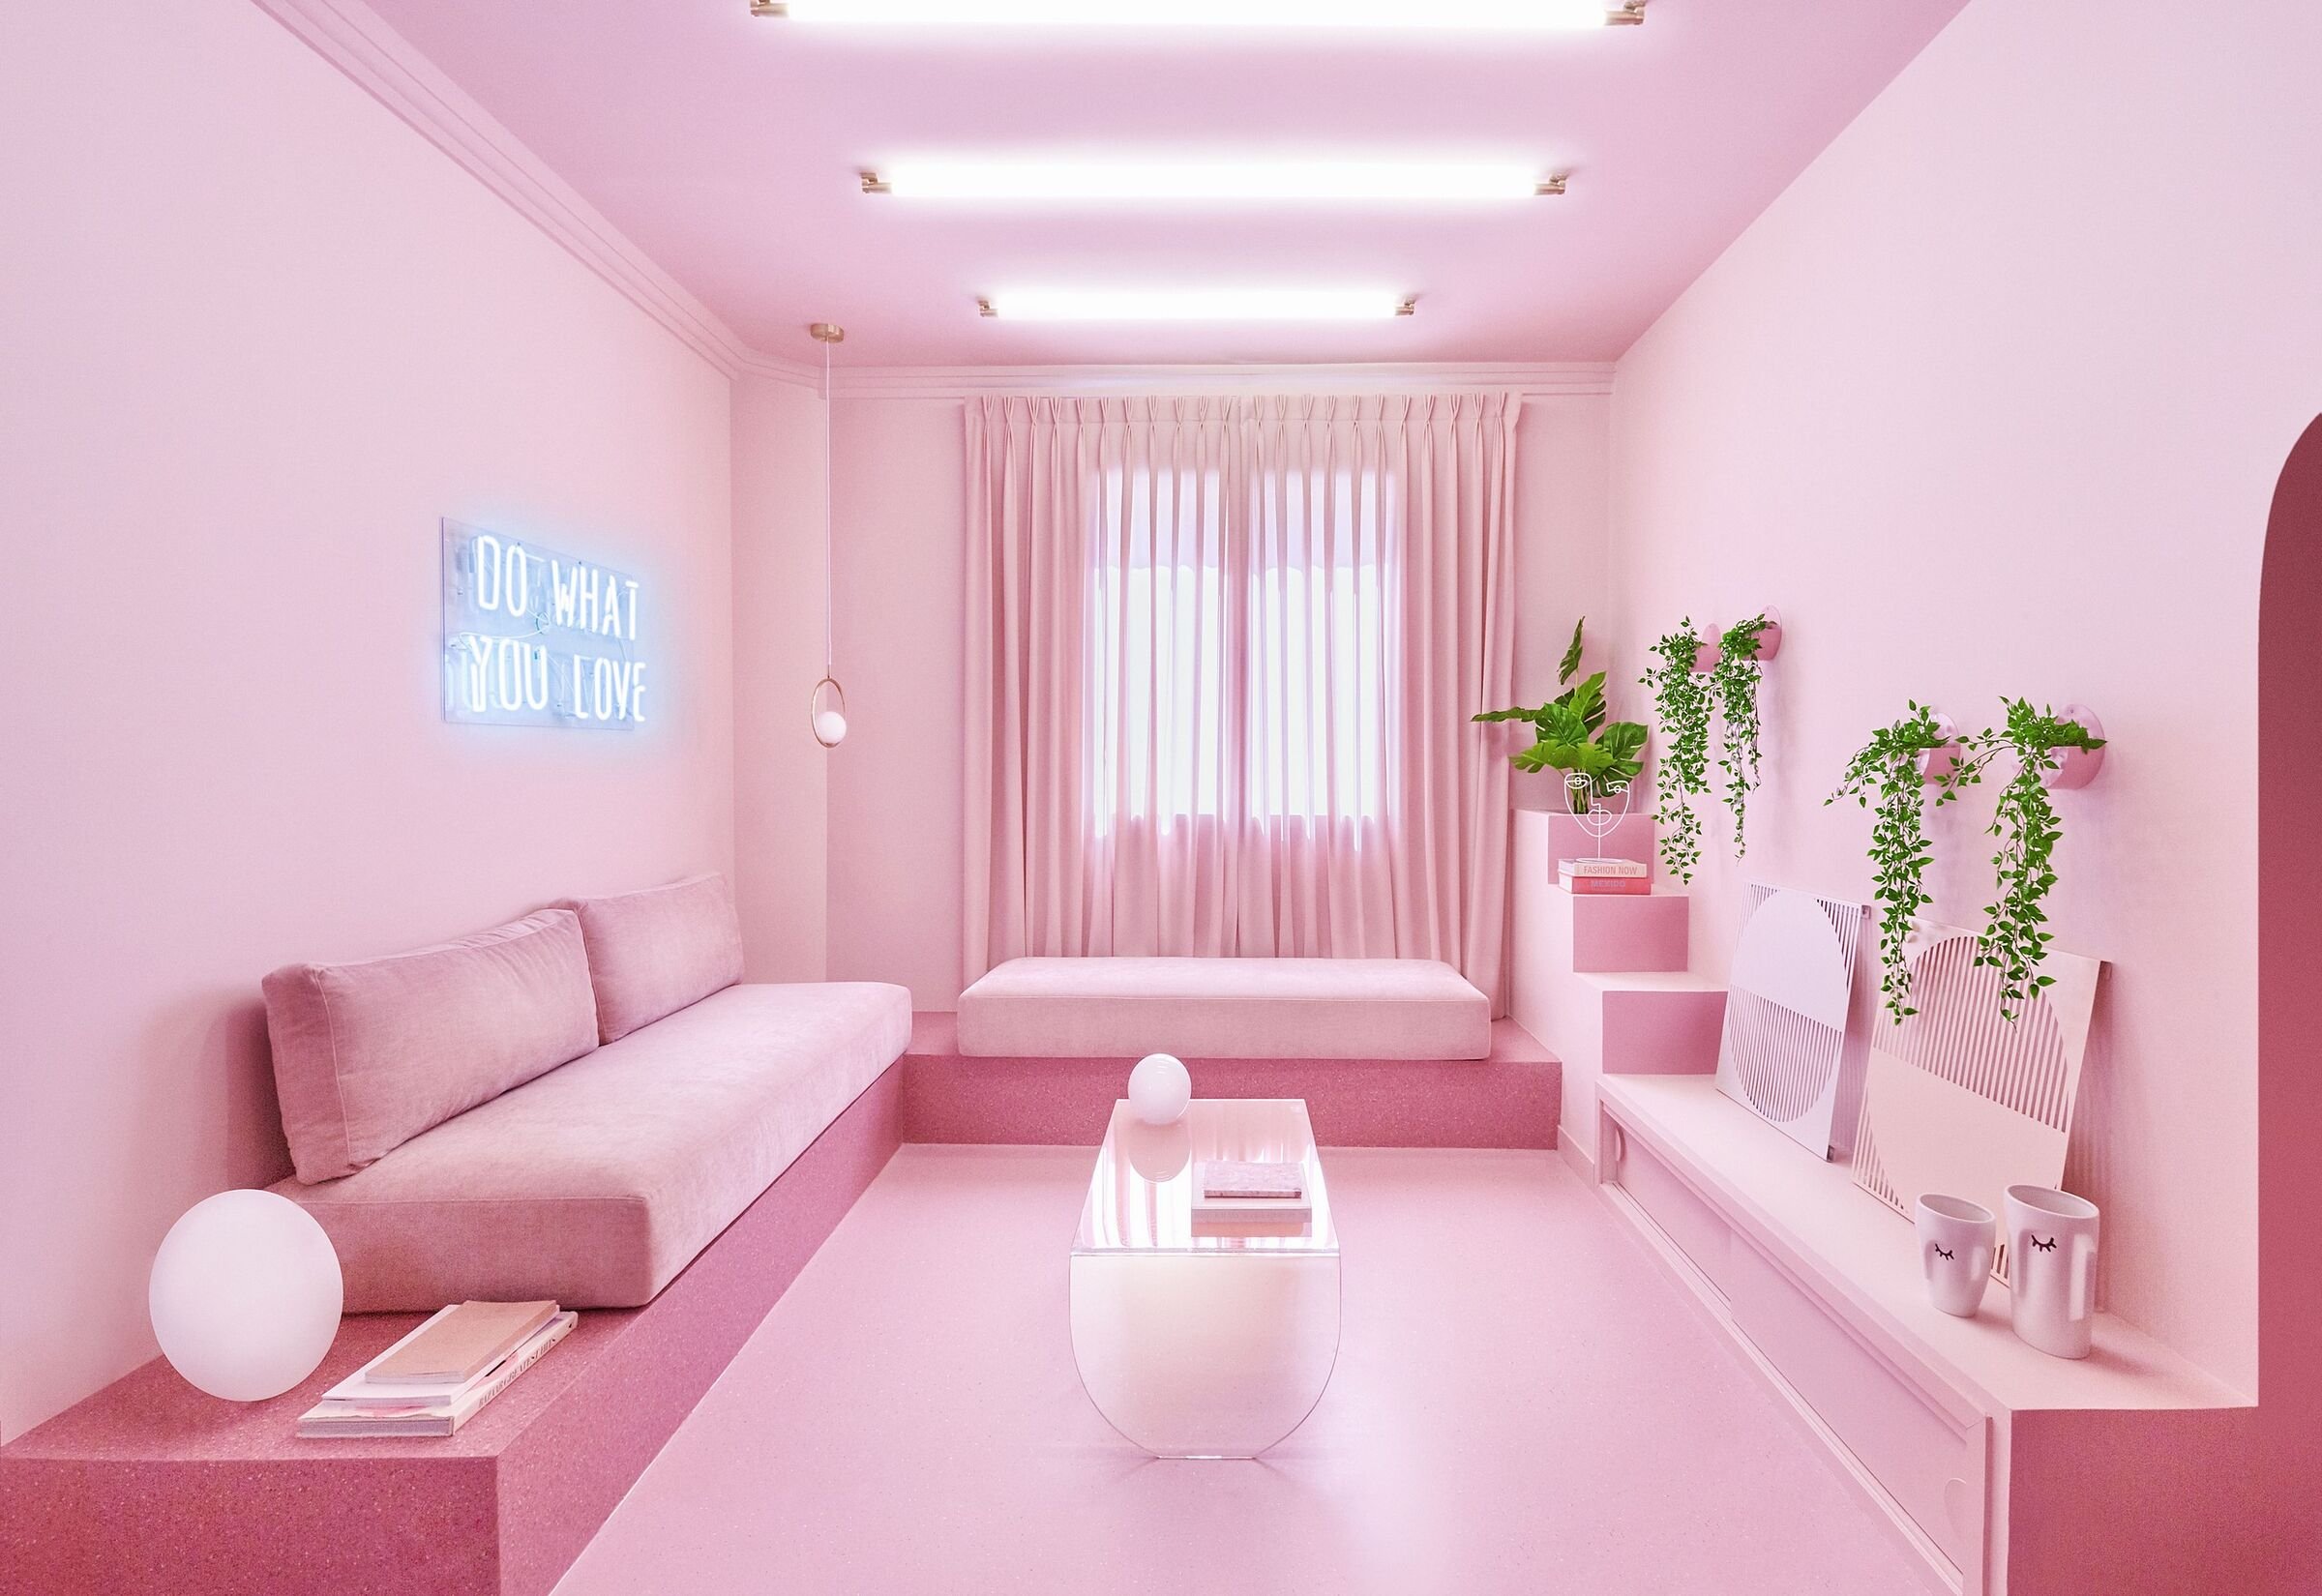 Комната в розовых тонах. Розовый интерьер комнаты. Розовые стены в интерьере. Розовый цвет в интерьере спальни. Комната в розовом цвете.